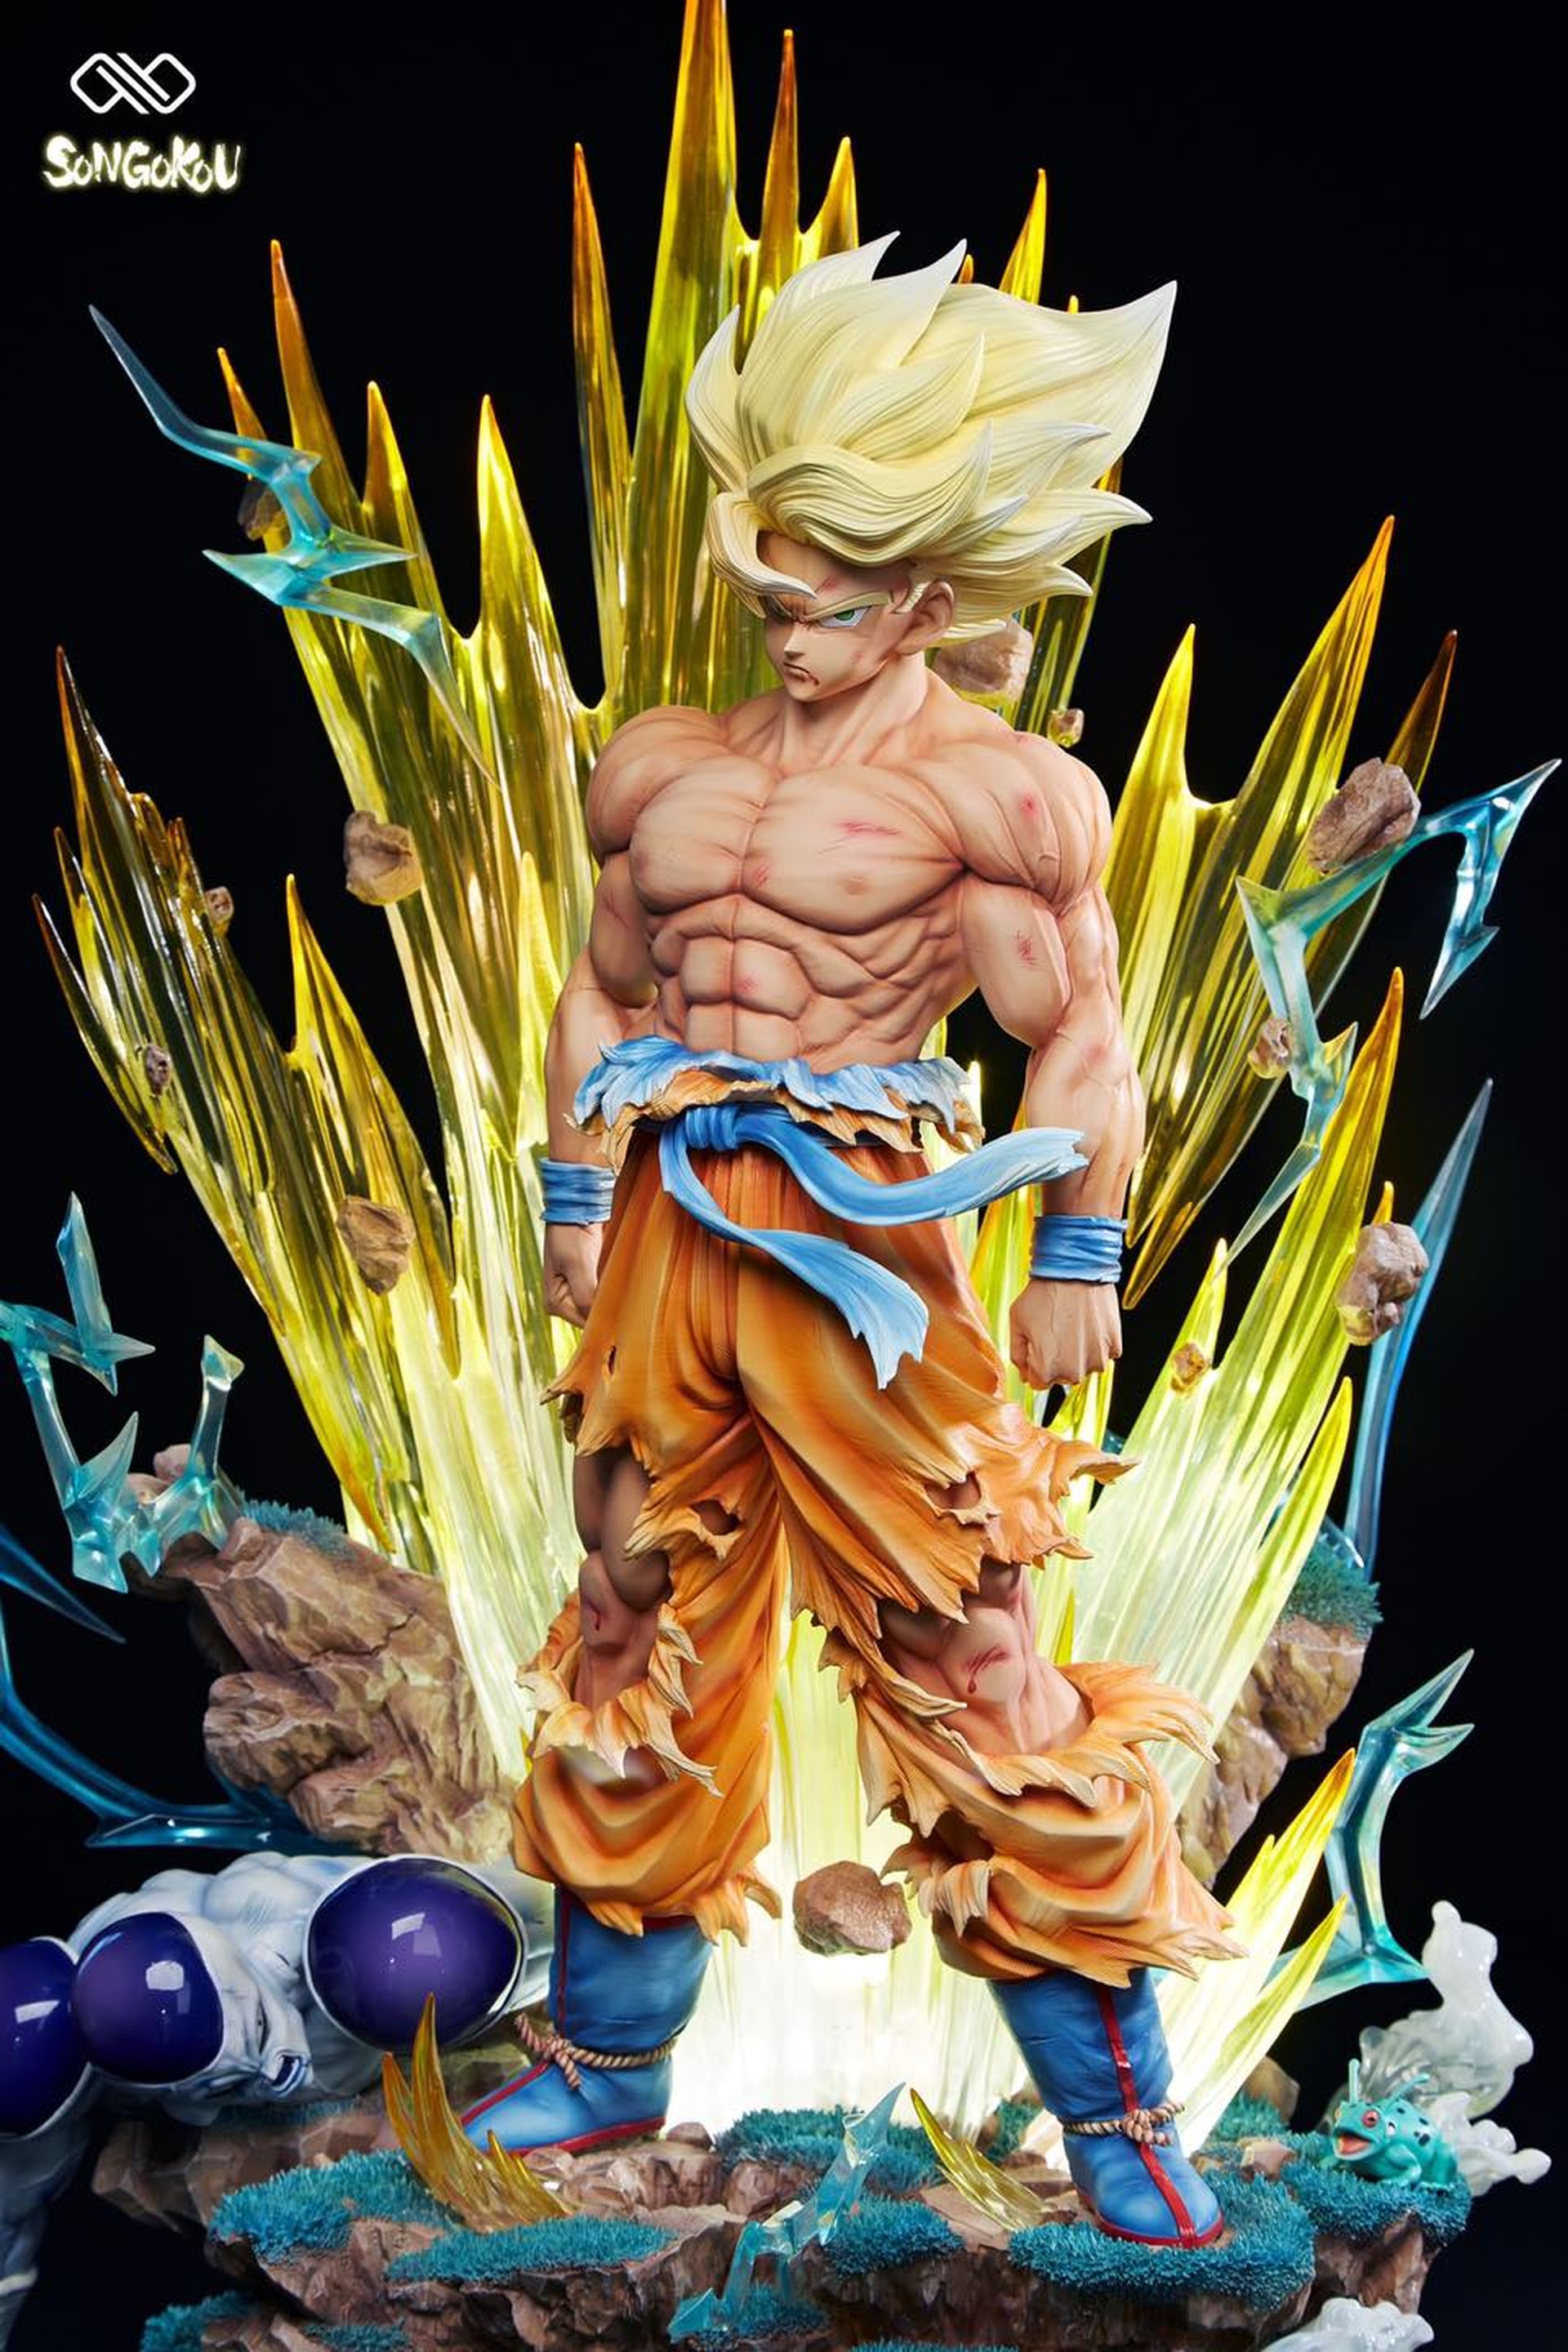 Dragon Ball Z - La nueva resina de Goku Super Saiyan con Freezer mutilado en Namek